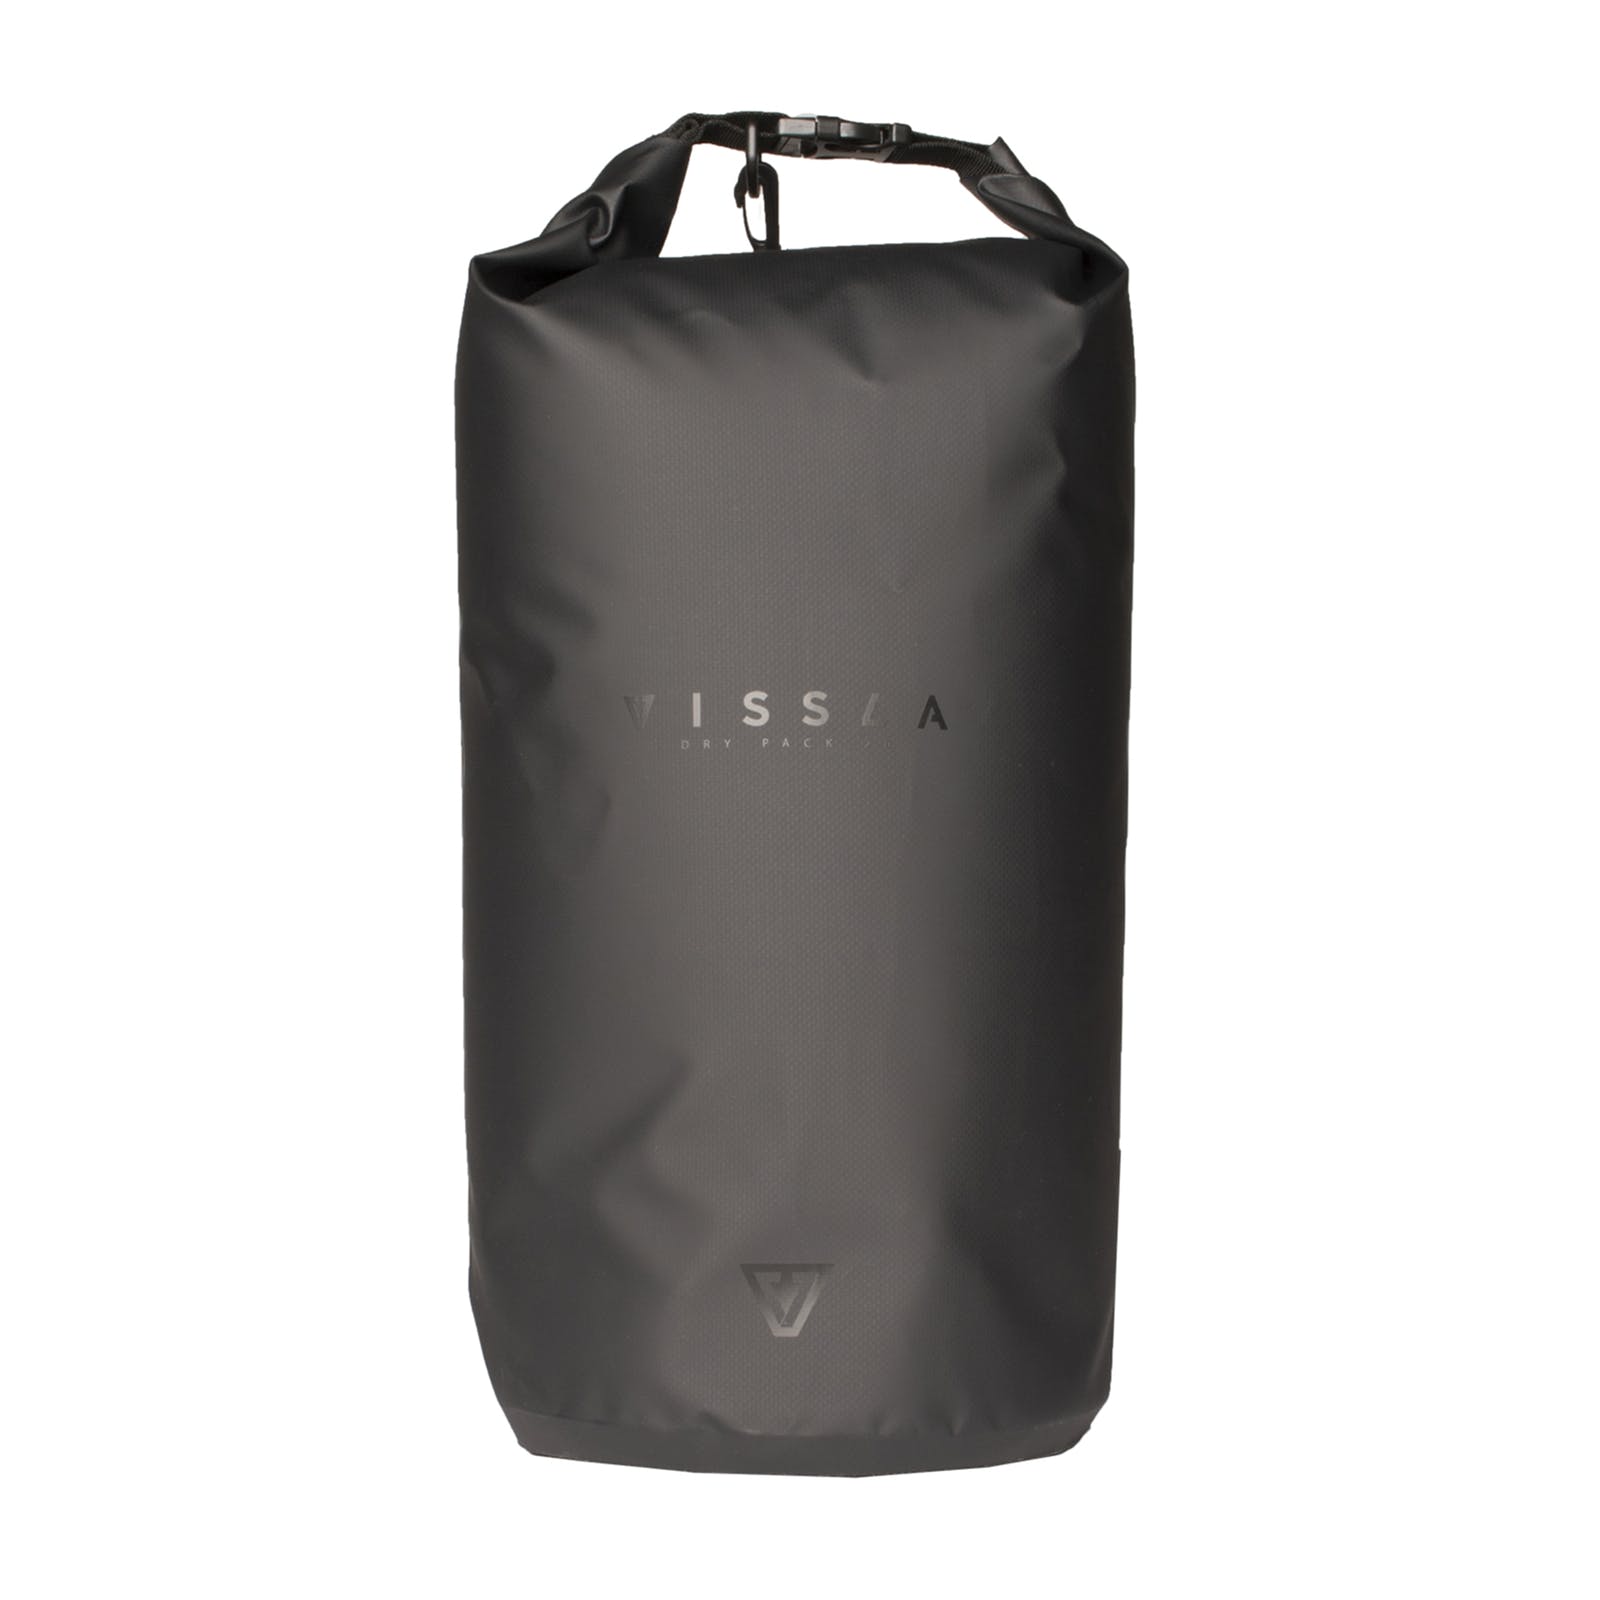 Vissla 7 Seas 20 Liter Dry Bag